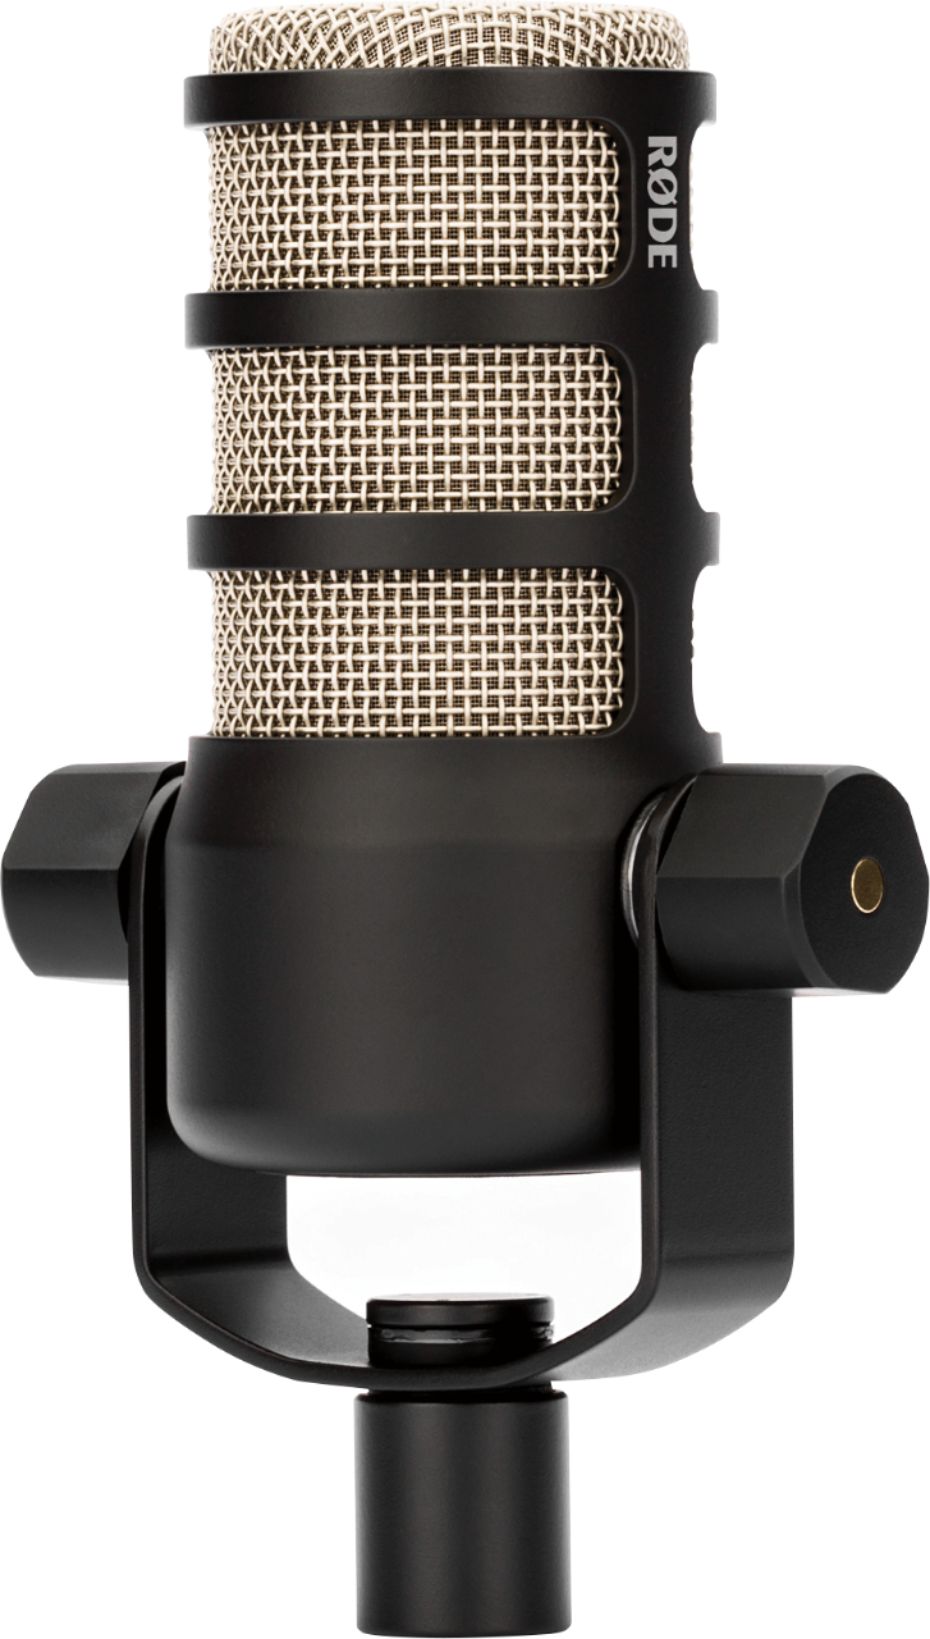 RØDE PODMIC Dynamic Podcasting Microphone PODMIC - Best Buy